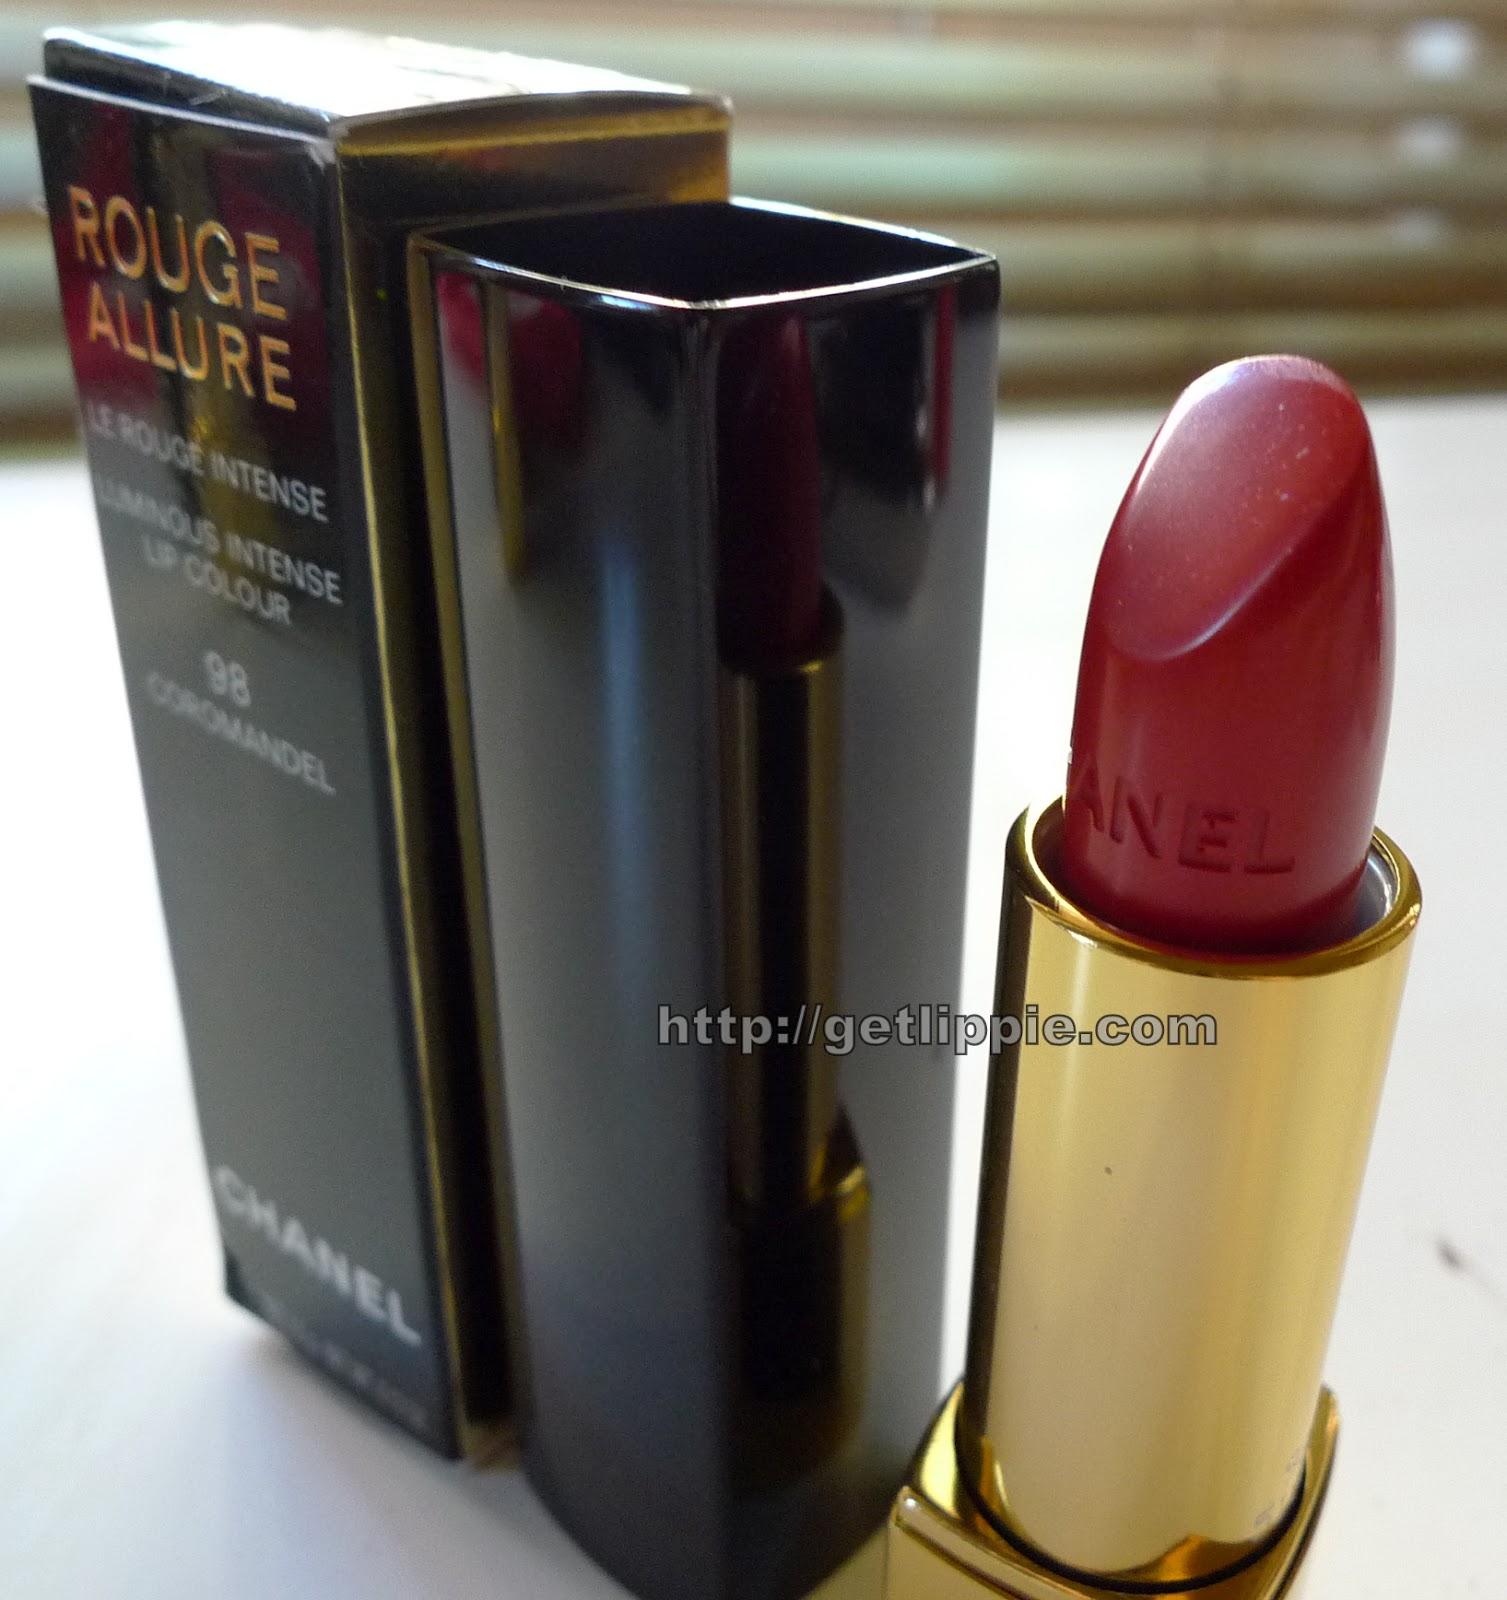 Chanel Rouge Allure: Inimitable, Coromandel and Passion - Get Lippie